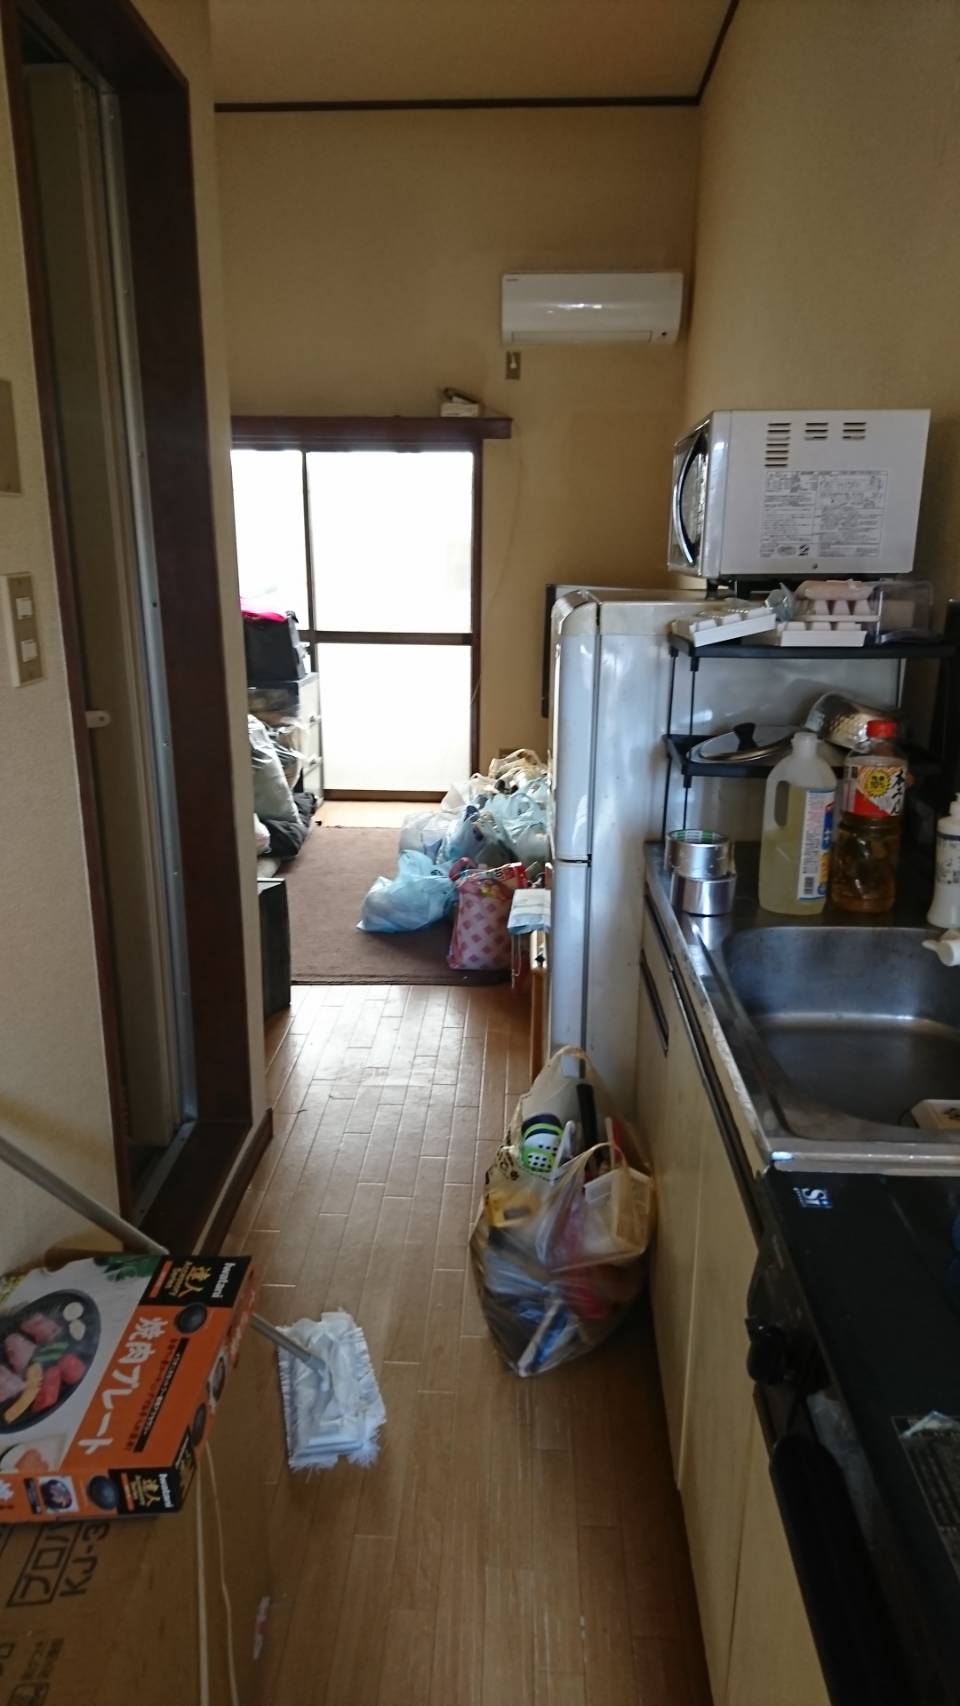 東京都東久留米市  アパート1K不要品(冷蔵庫、洗濯機、調理用品、洋服、洗剤などの生活用品、布団一式など)回収